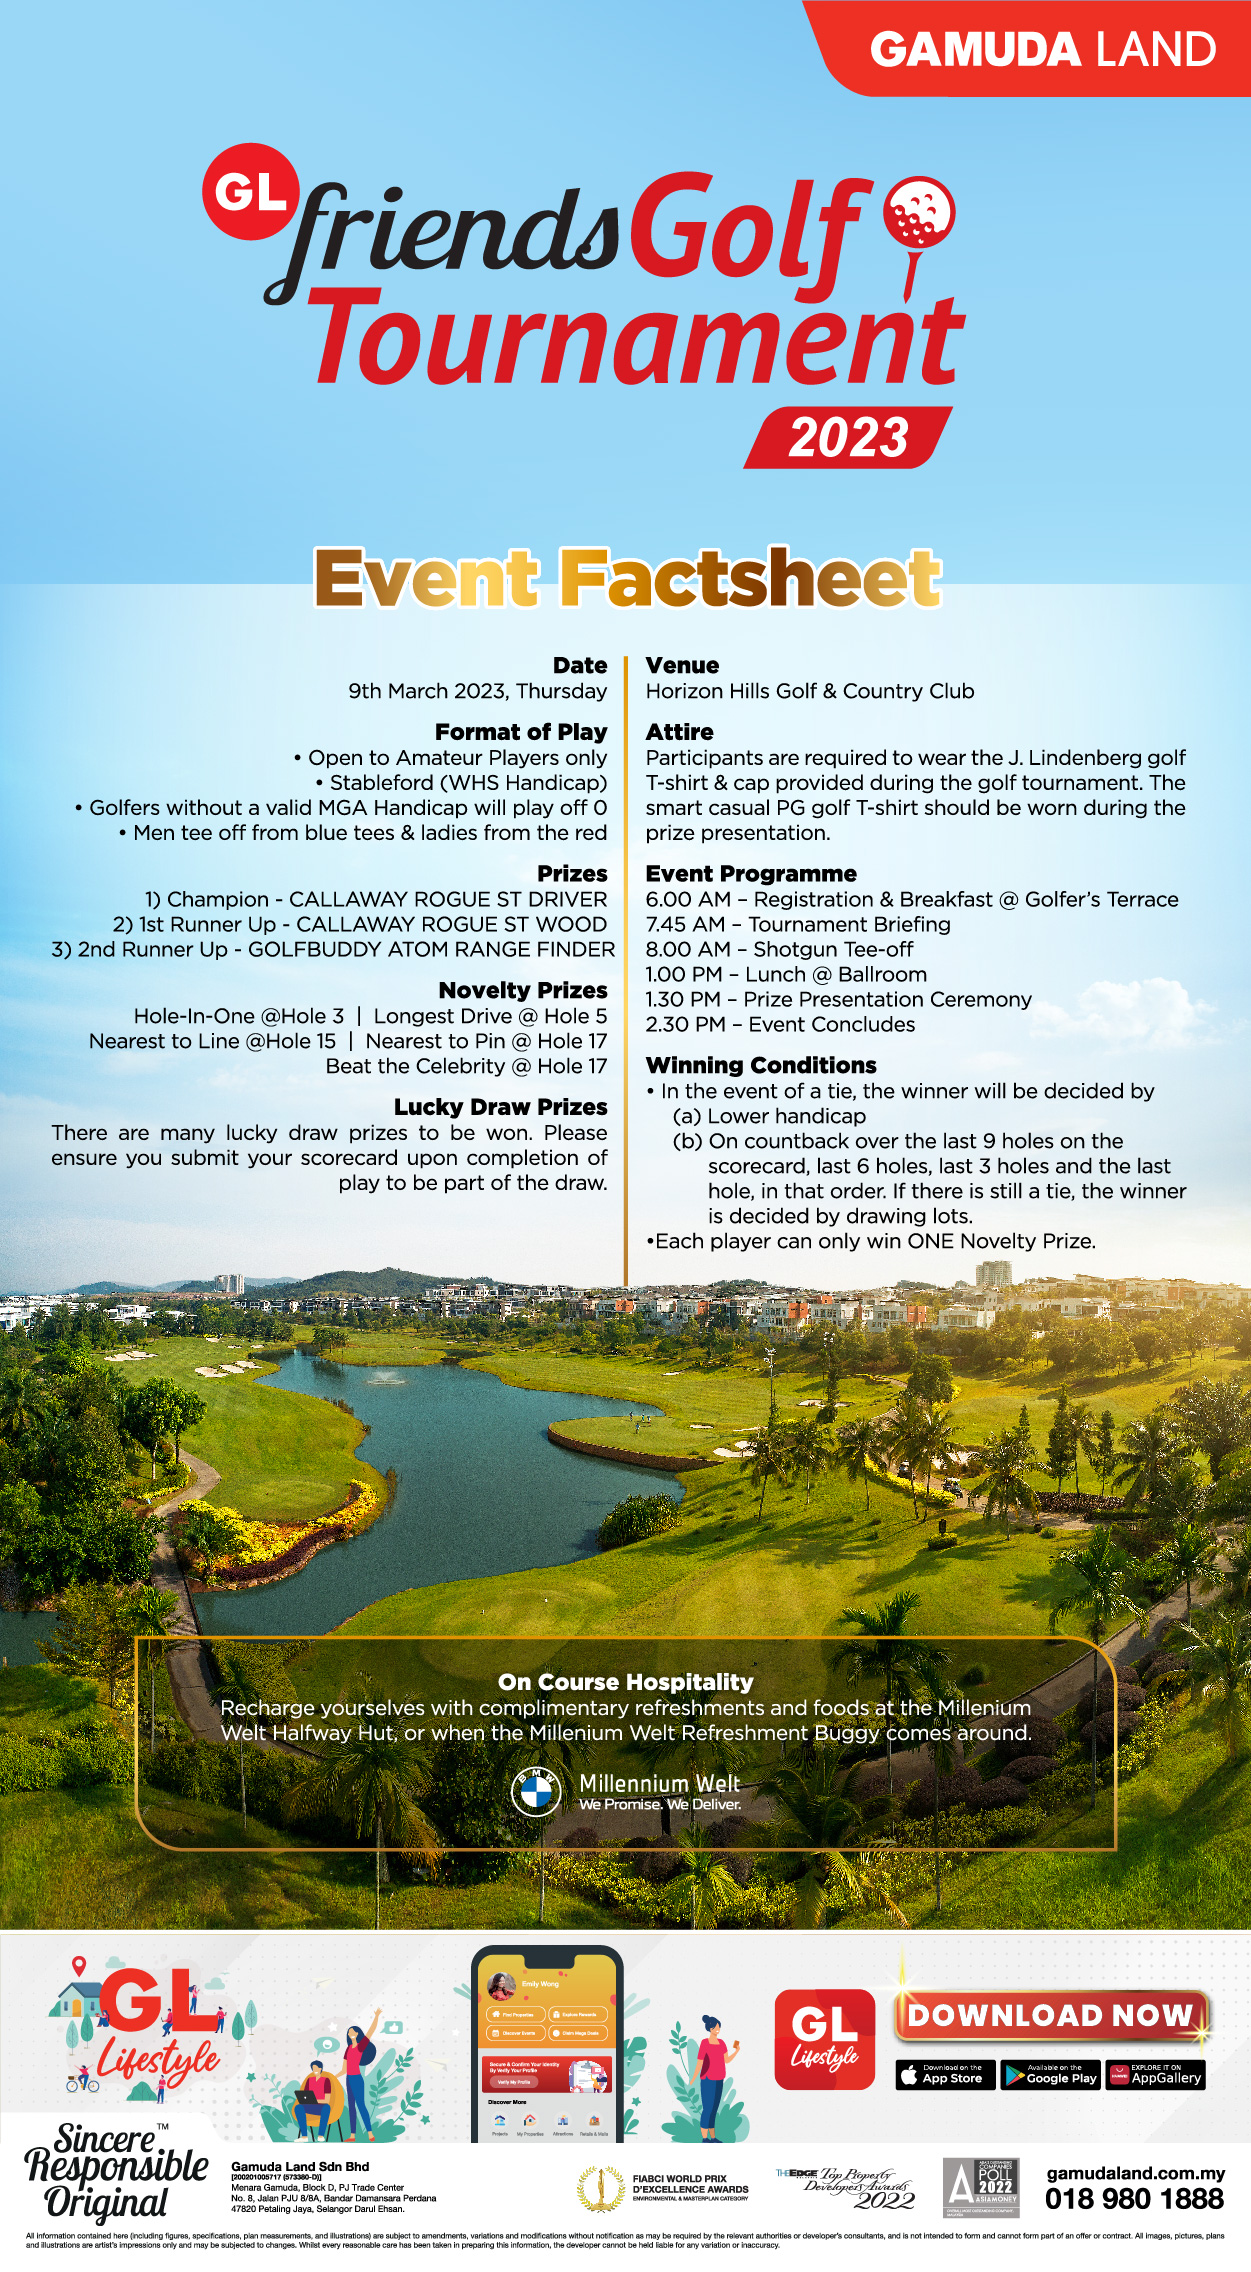 EDM Event Factsheet